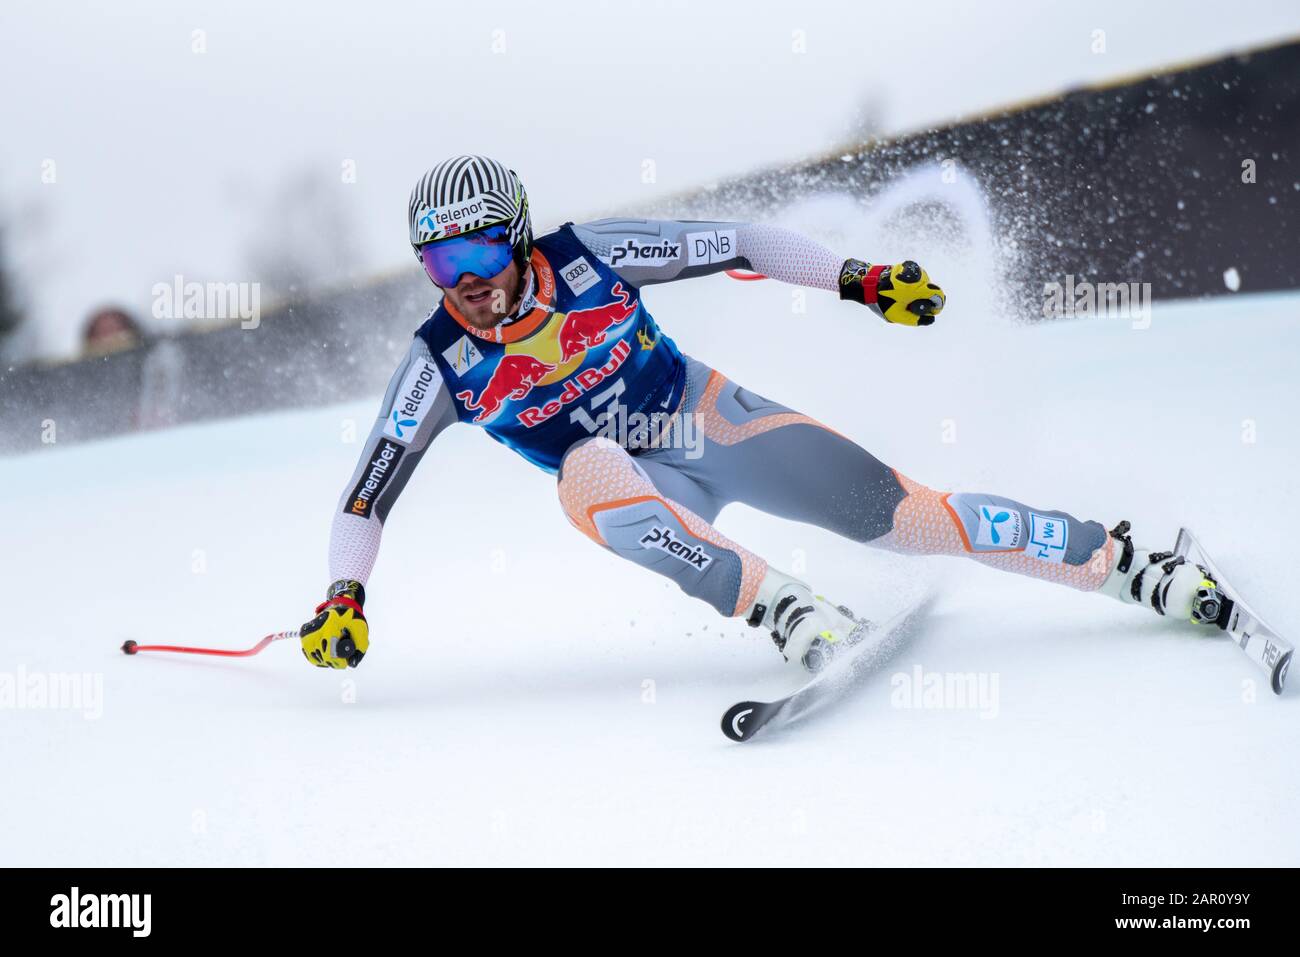 Kjetil Jansrud of Norway at the Ski Alpin: 80. Hahnenkamm Race 2020 - Audi FIS Alpine Ski World Cup - Men's Downhill at the Streif on January 25, 2020 in Kitzbuehel, AUSTRIA. Credit: European Sports Photographic Agency/Alamy Live News Stock Photo